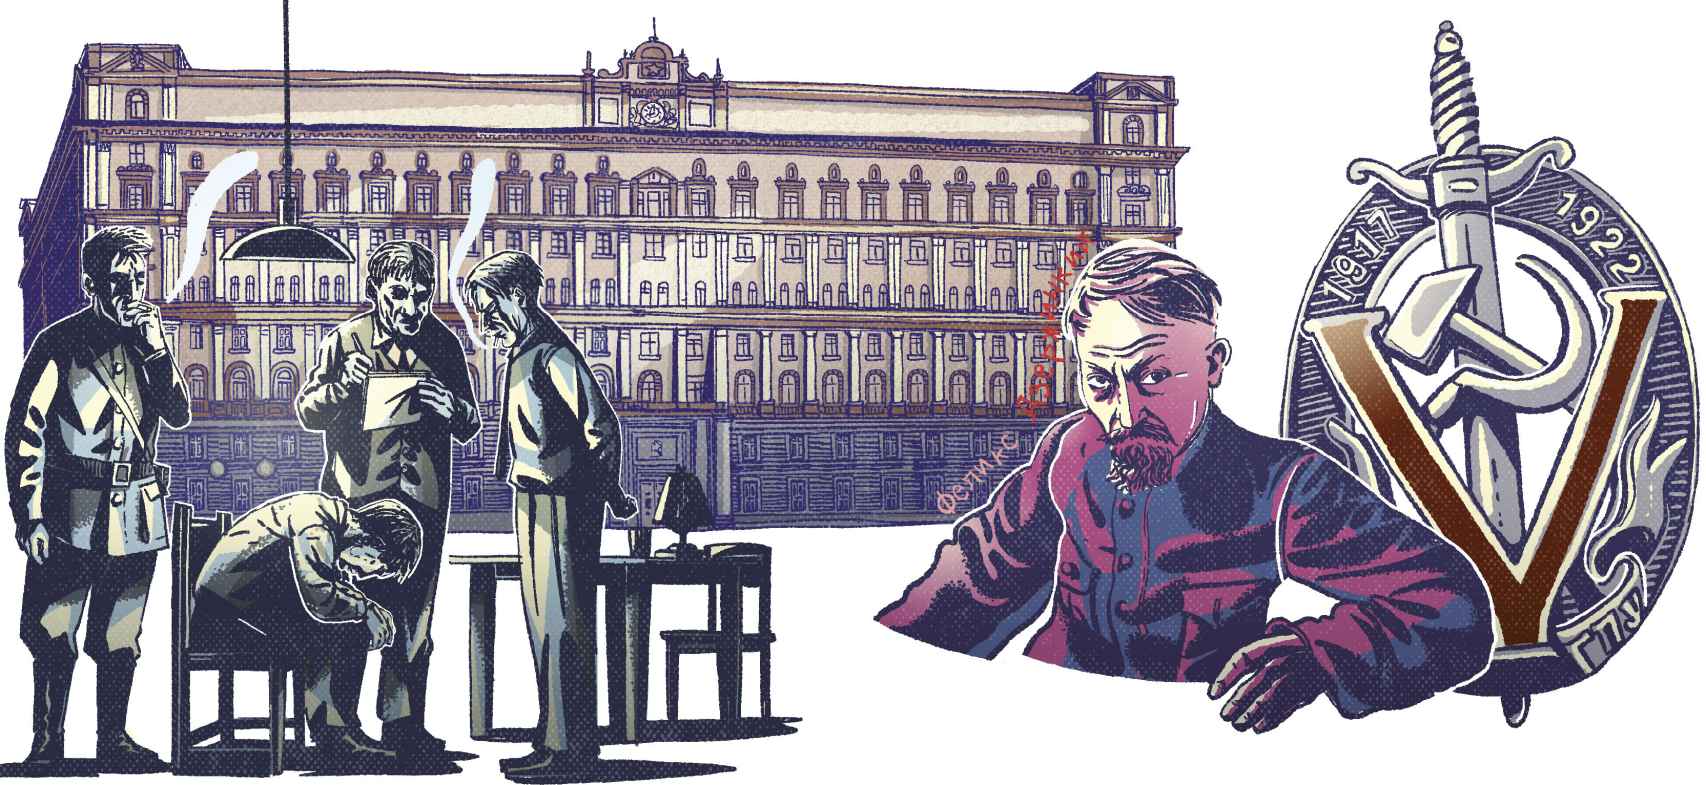 La Cheka de Lenin ilustrada por Agustín Comotto.